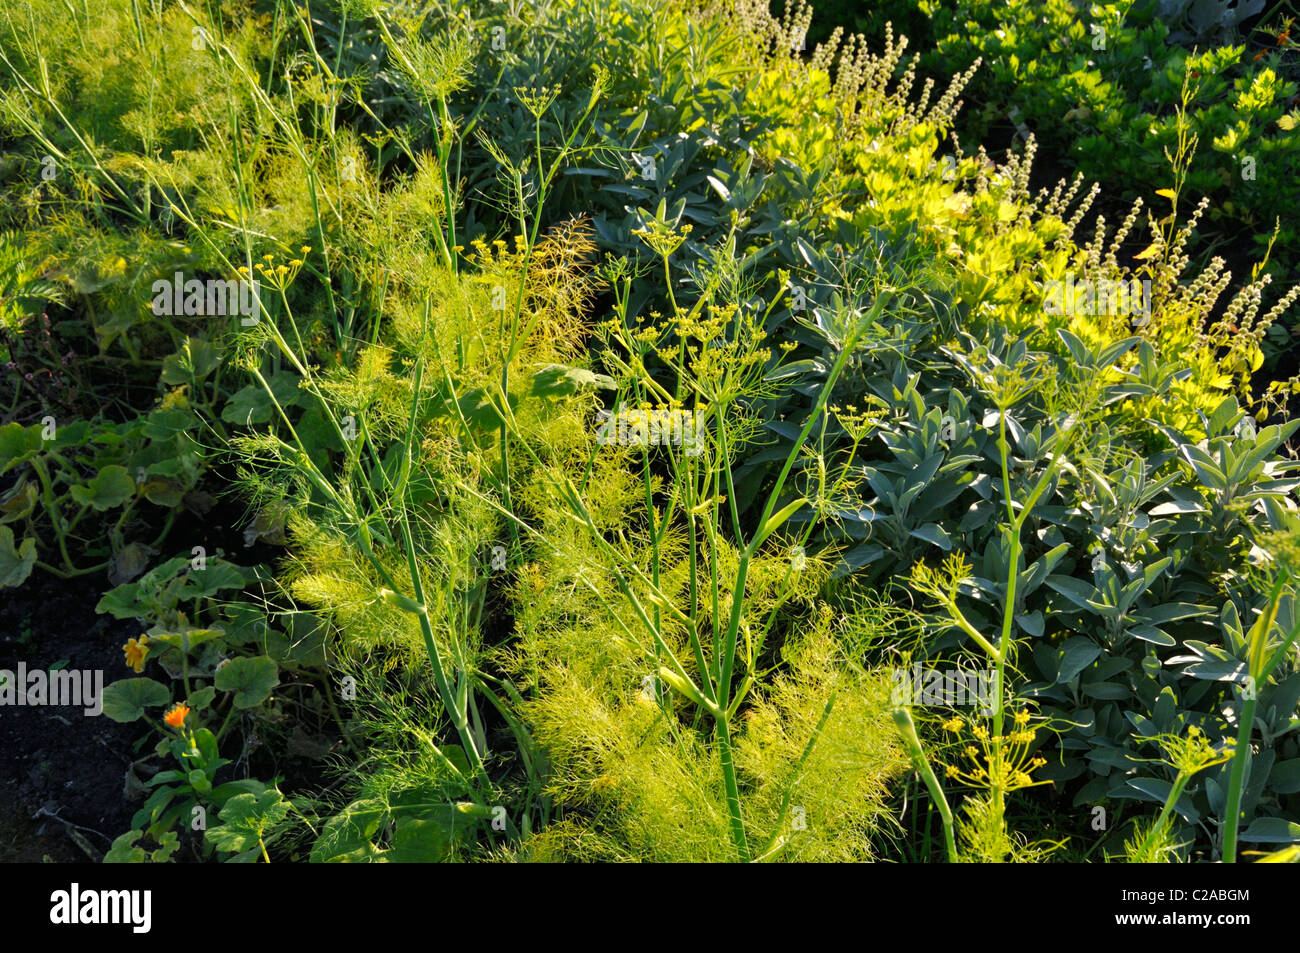 Garden nasturtium (Tropaeolum majus), dill (Anethum graveolens) and sages (Salvia) Stock Photo